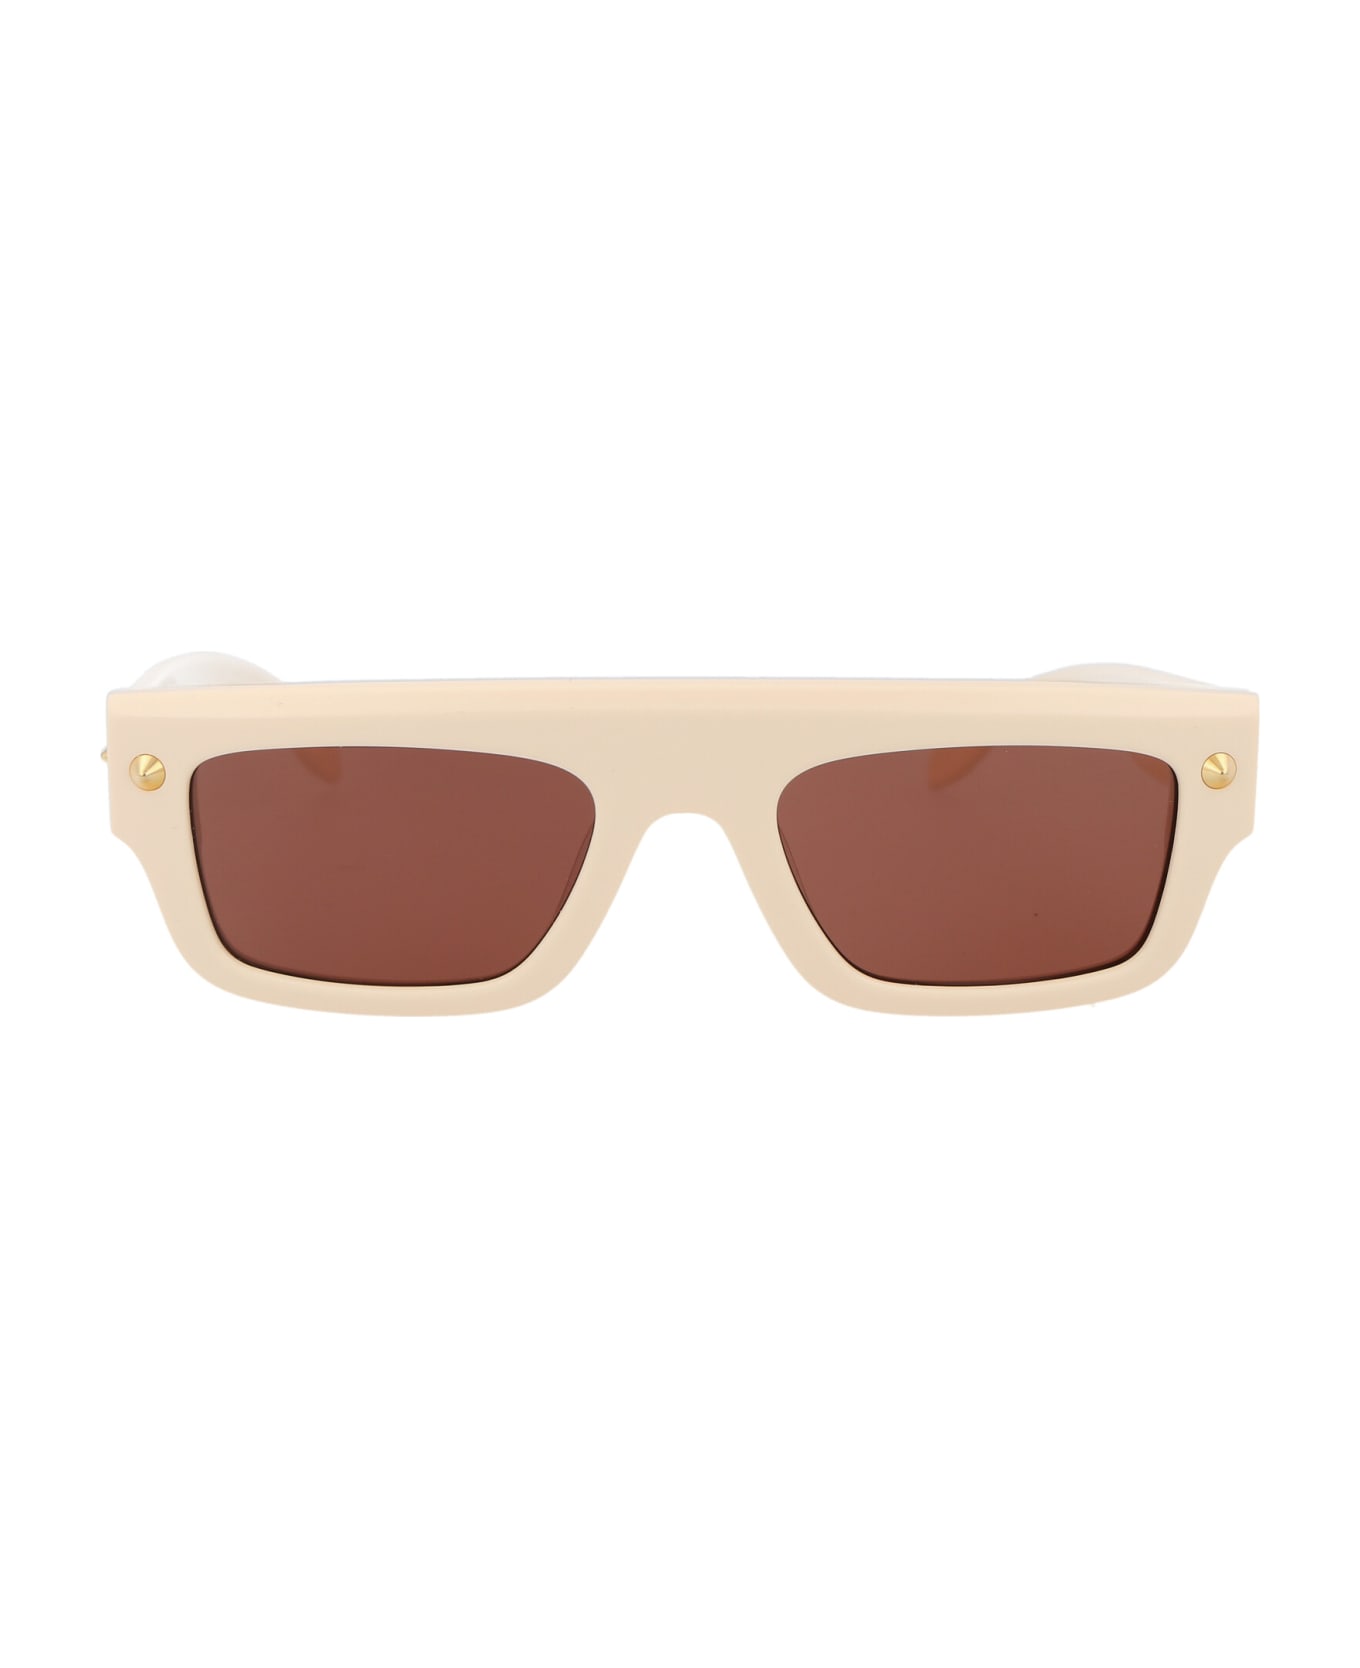 Alexander McQueen Eyewear Am0427s Sunglasses - 004 IVORY IVORY BROWN